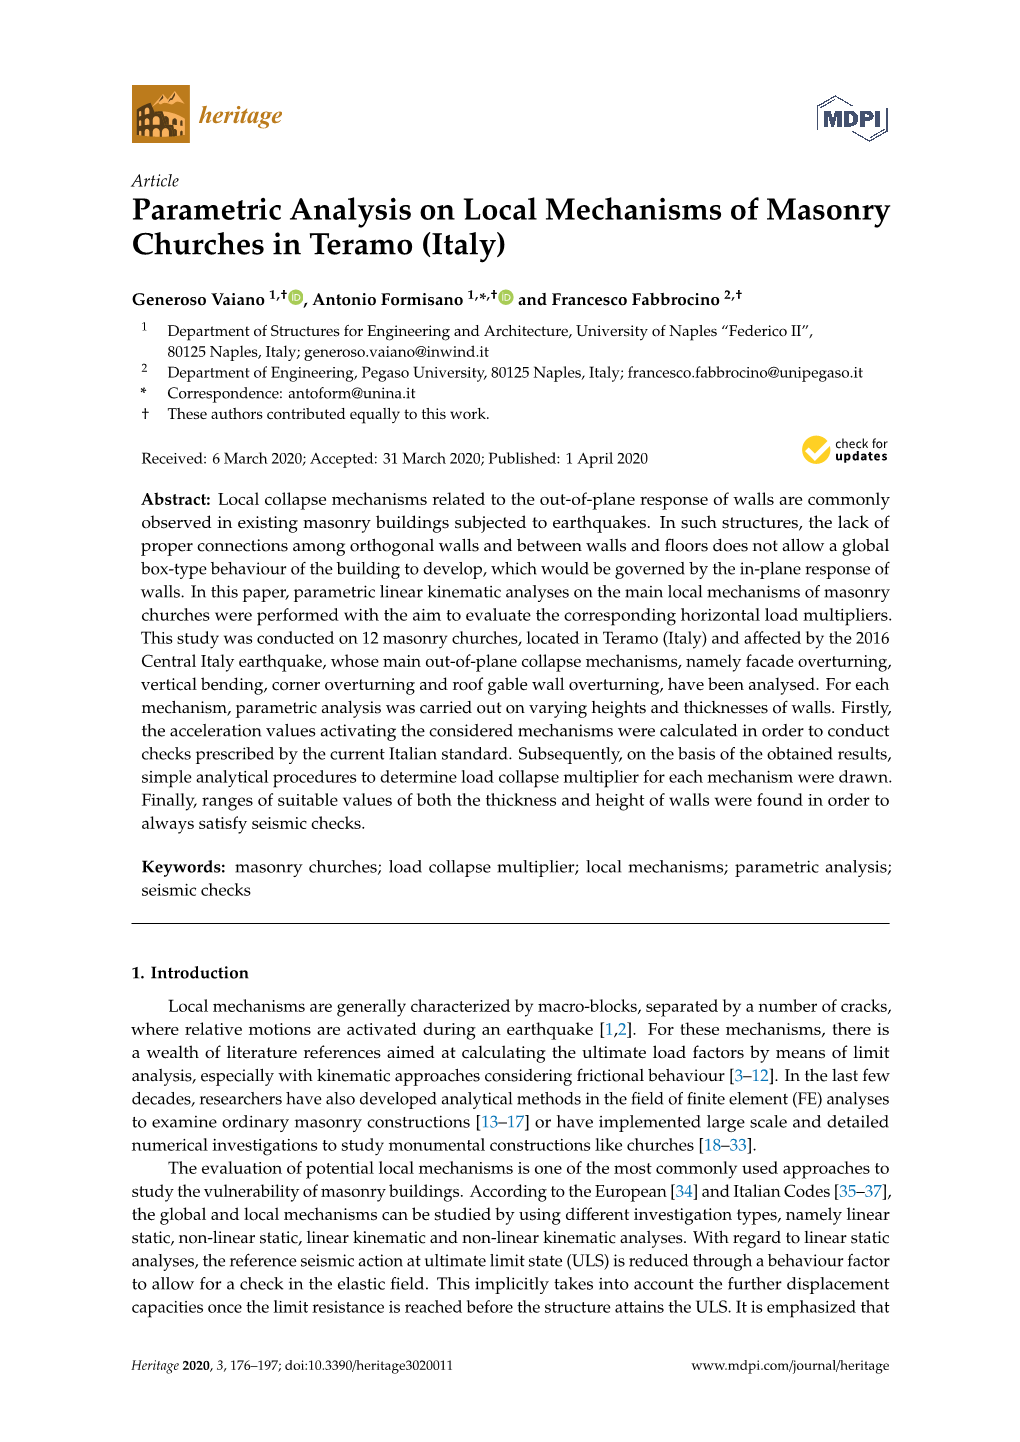 Parametric Analysis on Local Mechanisms of Masonry Churches in Teramo (Italy)